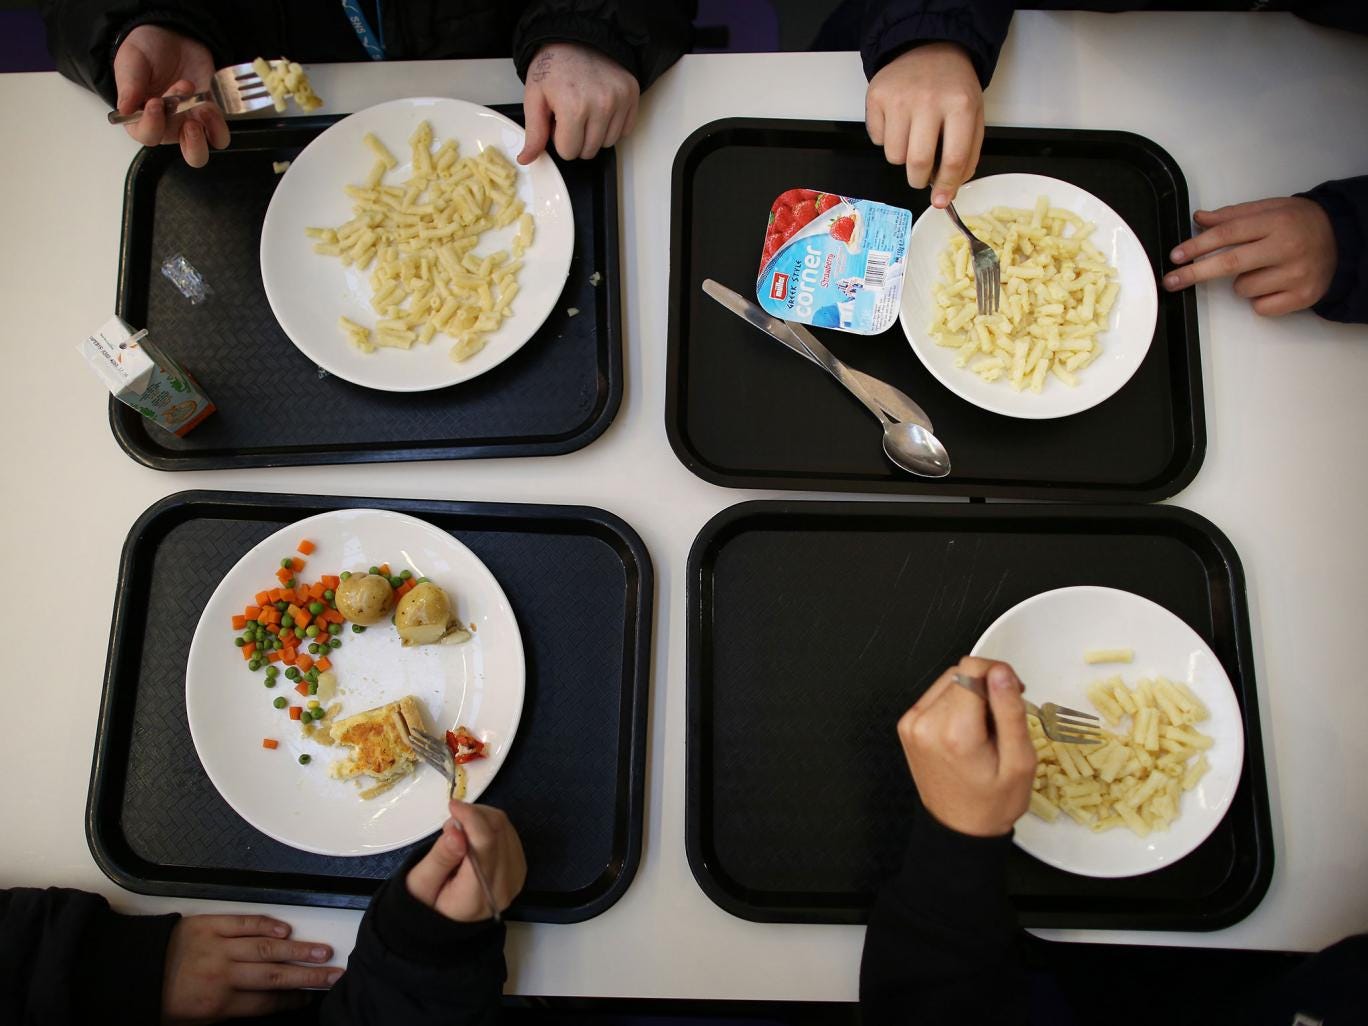 Students eat their school dinner